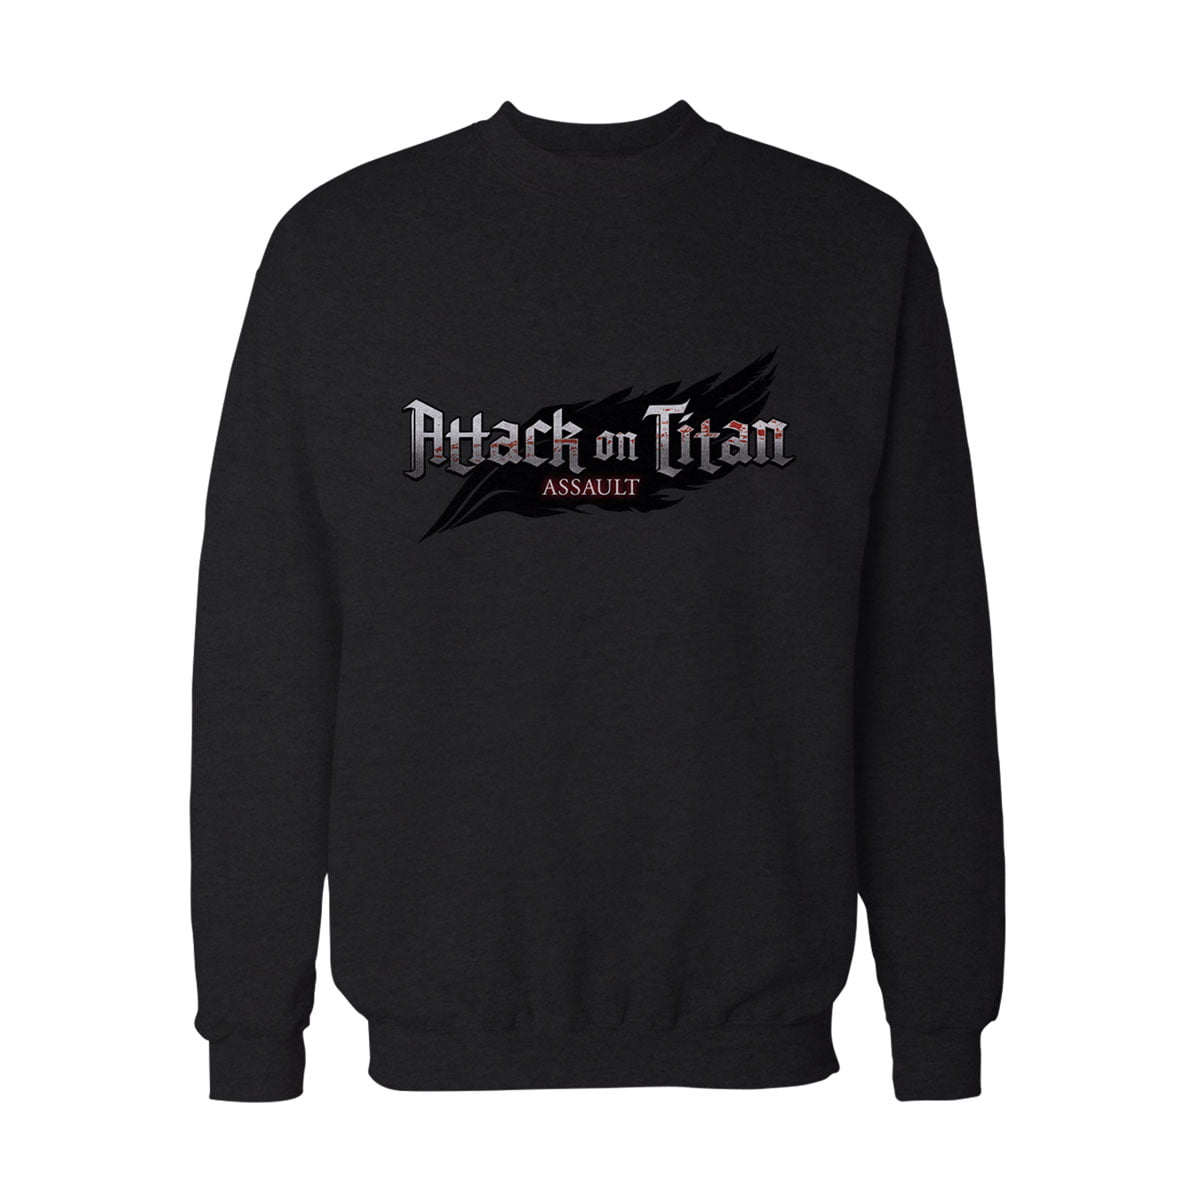 Attack on titan logo no2 sweatshirt s - attack on titan (titana saldırı) logo no2 sweatshirt - figurex